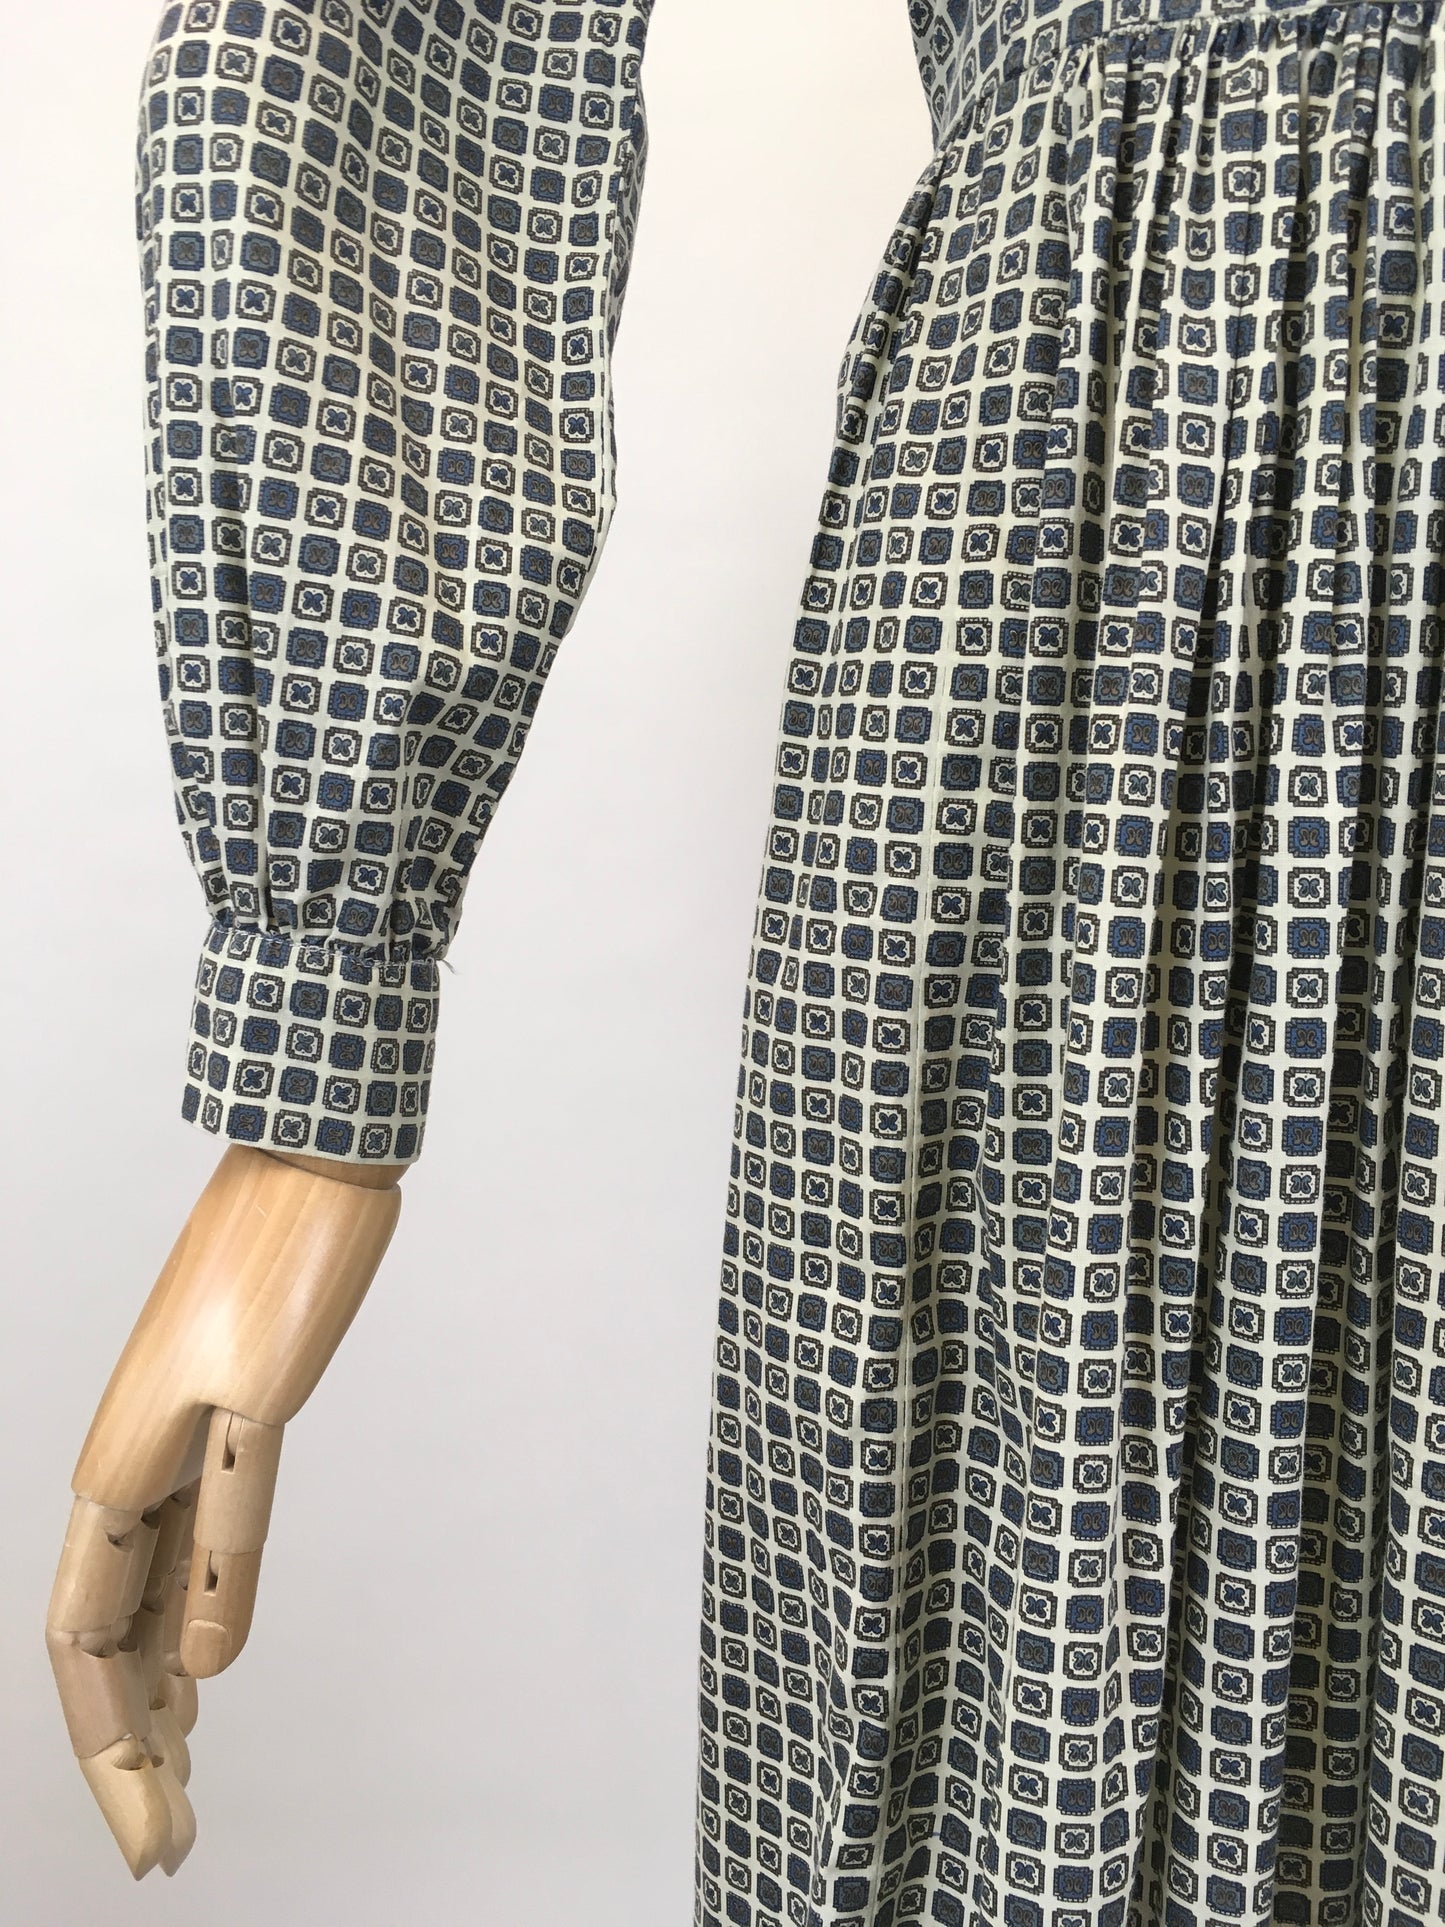 Original 1950’s Fabulous ShirtWaister Dress - In A Geometric Print Cotton